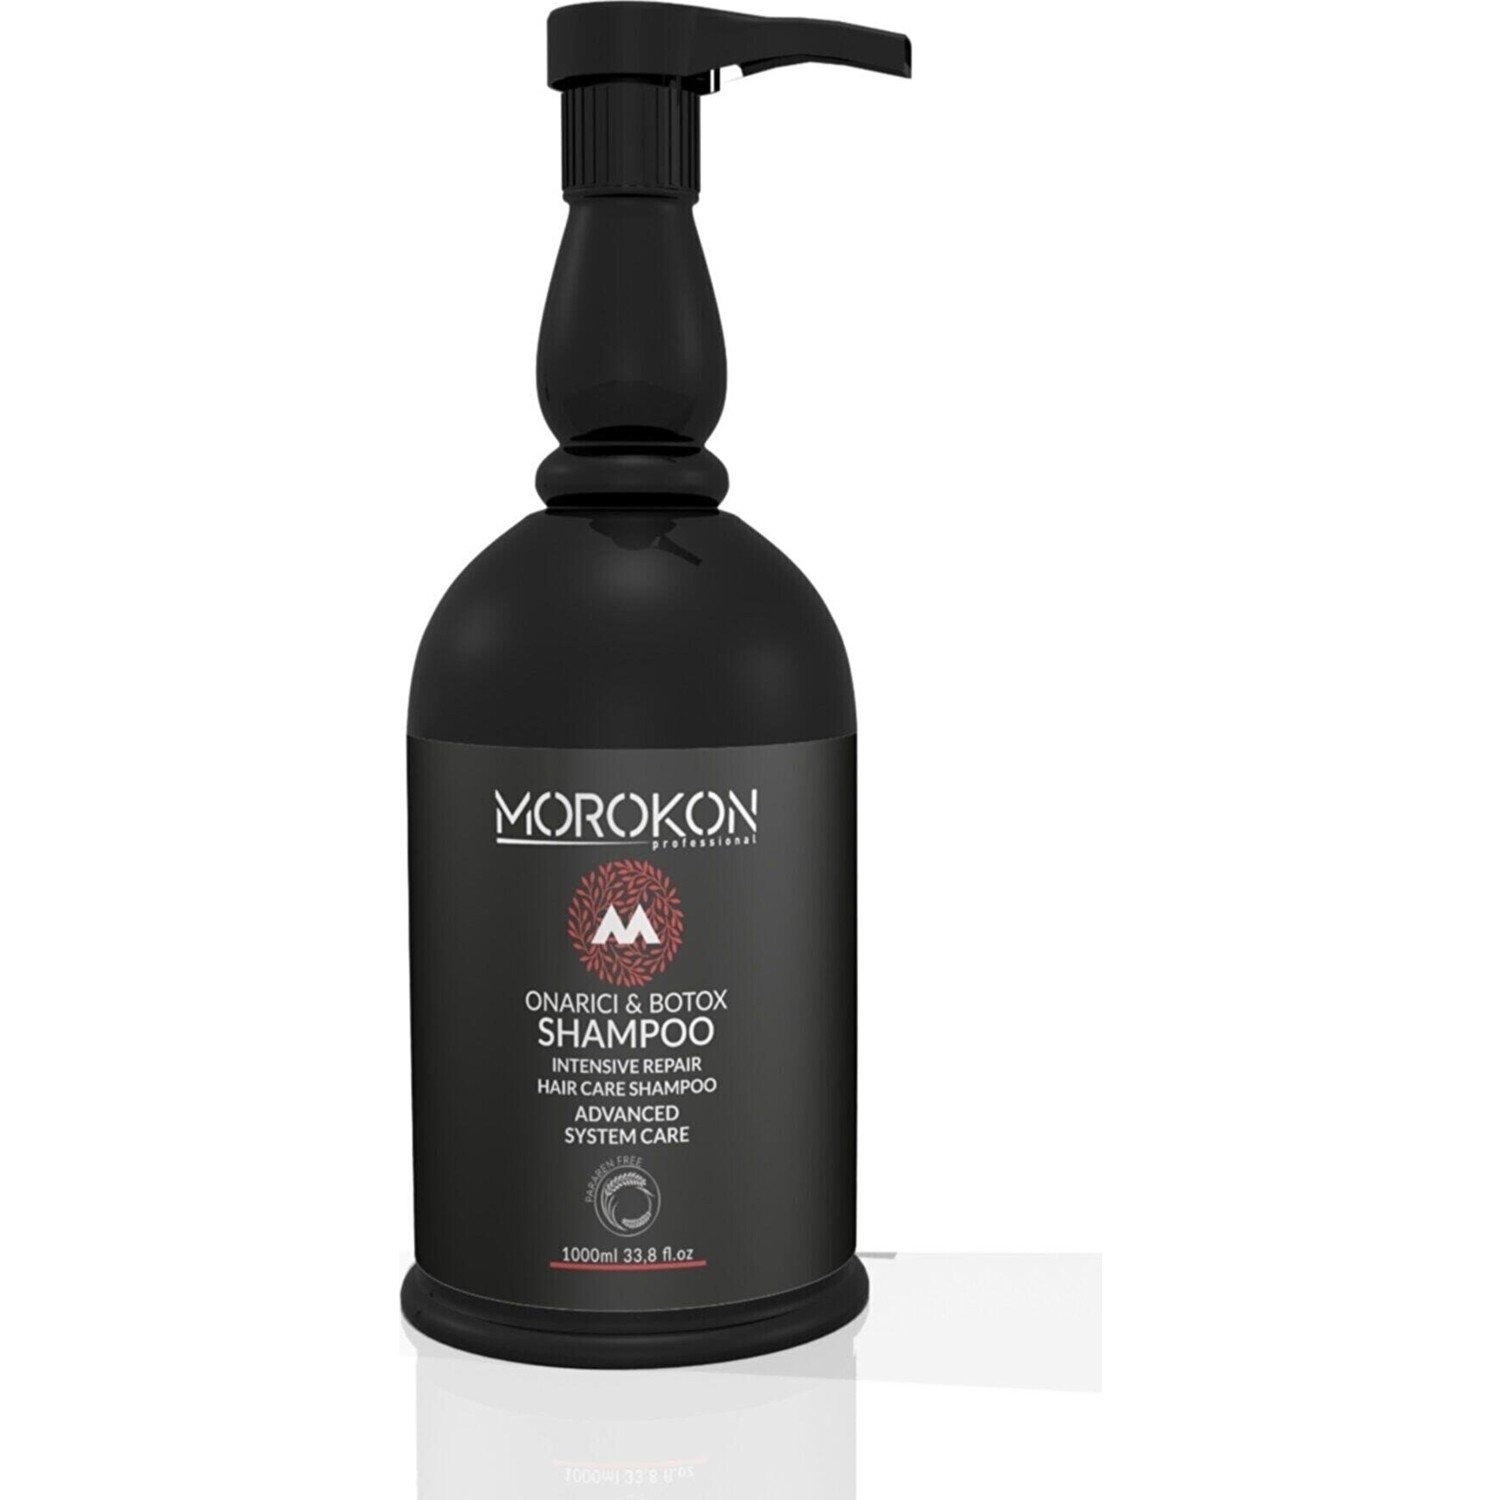 morokon onaricı botox shampon 500 ml